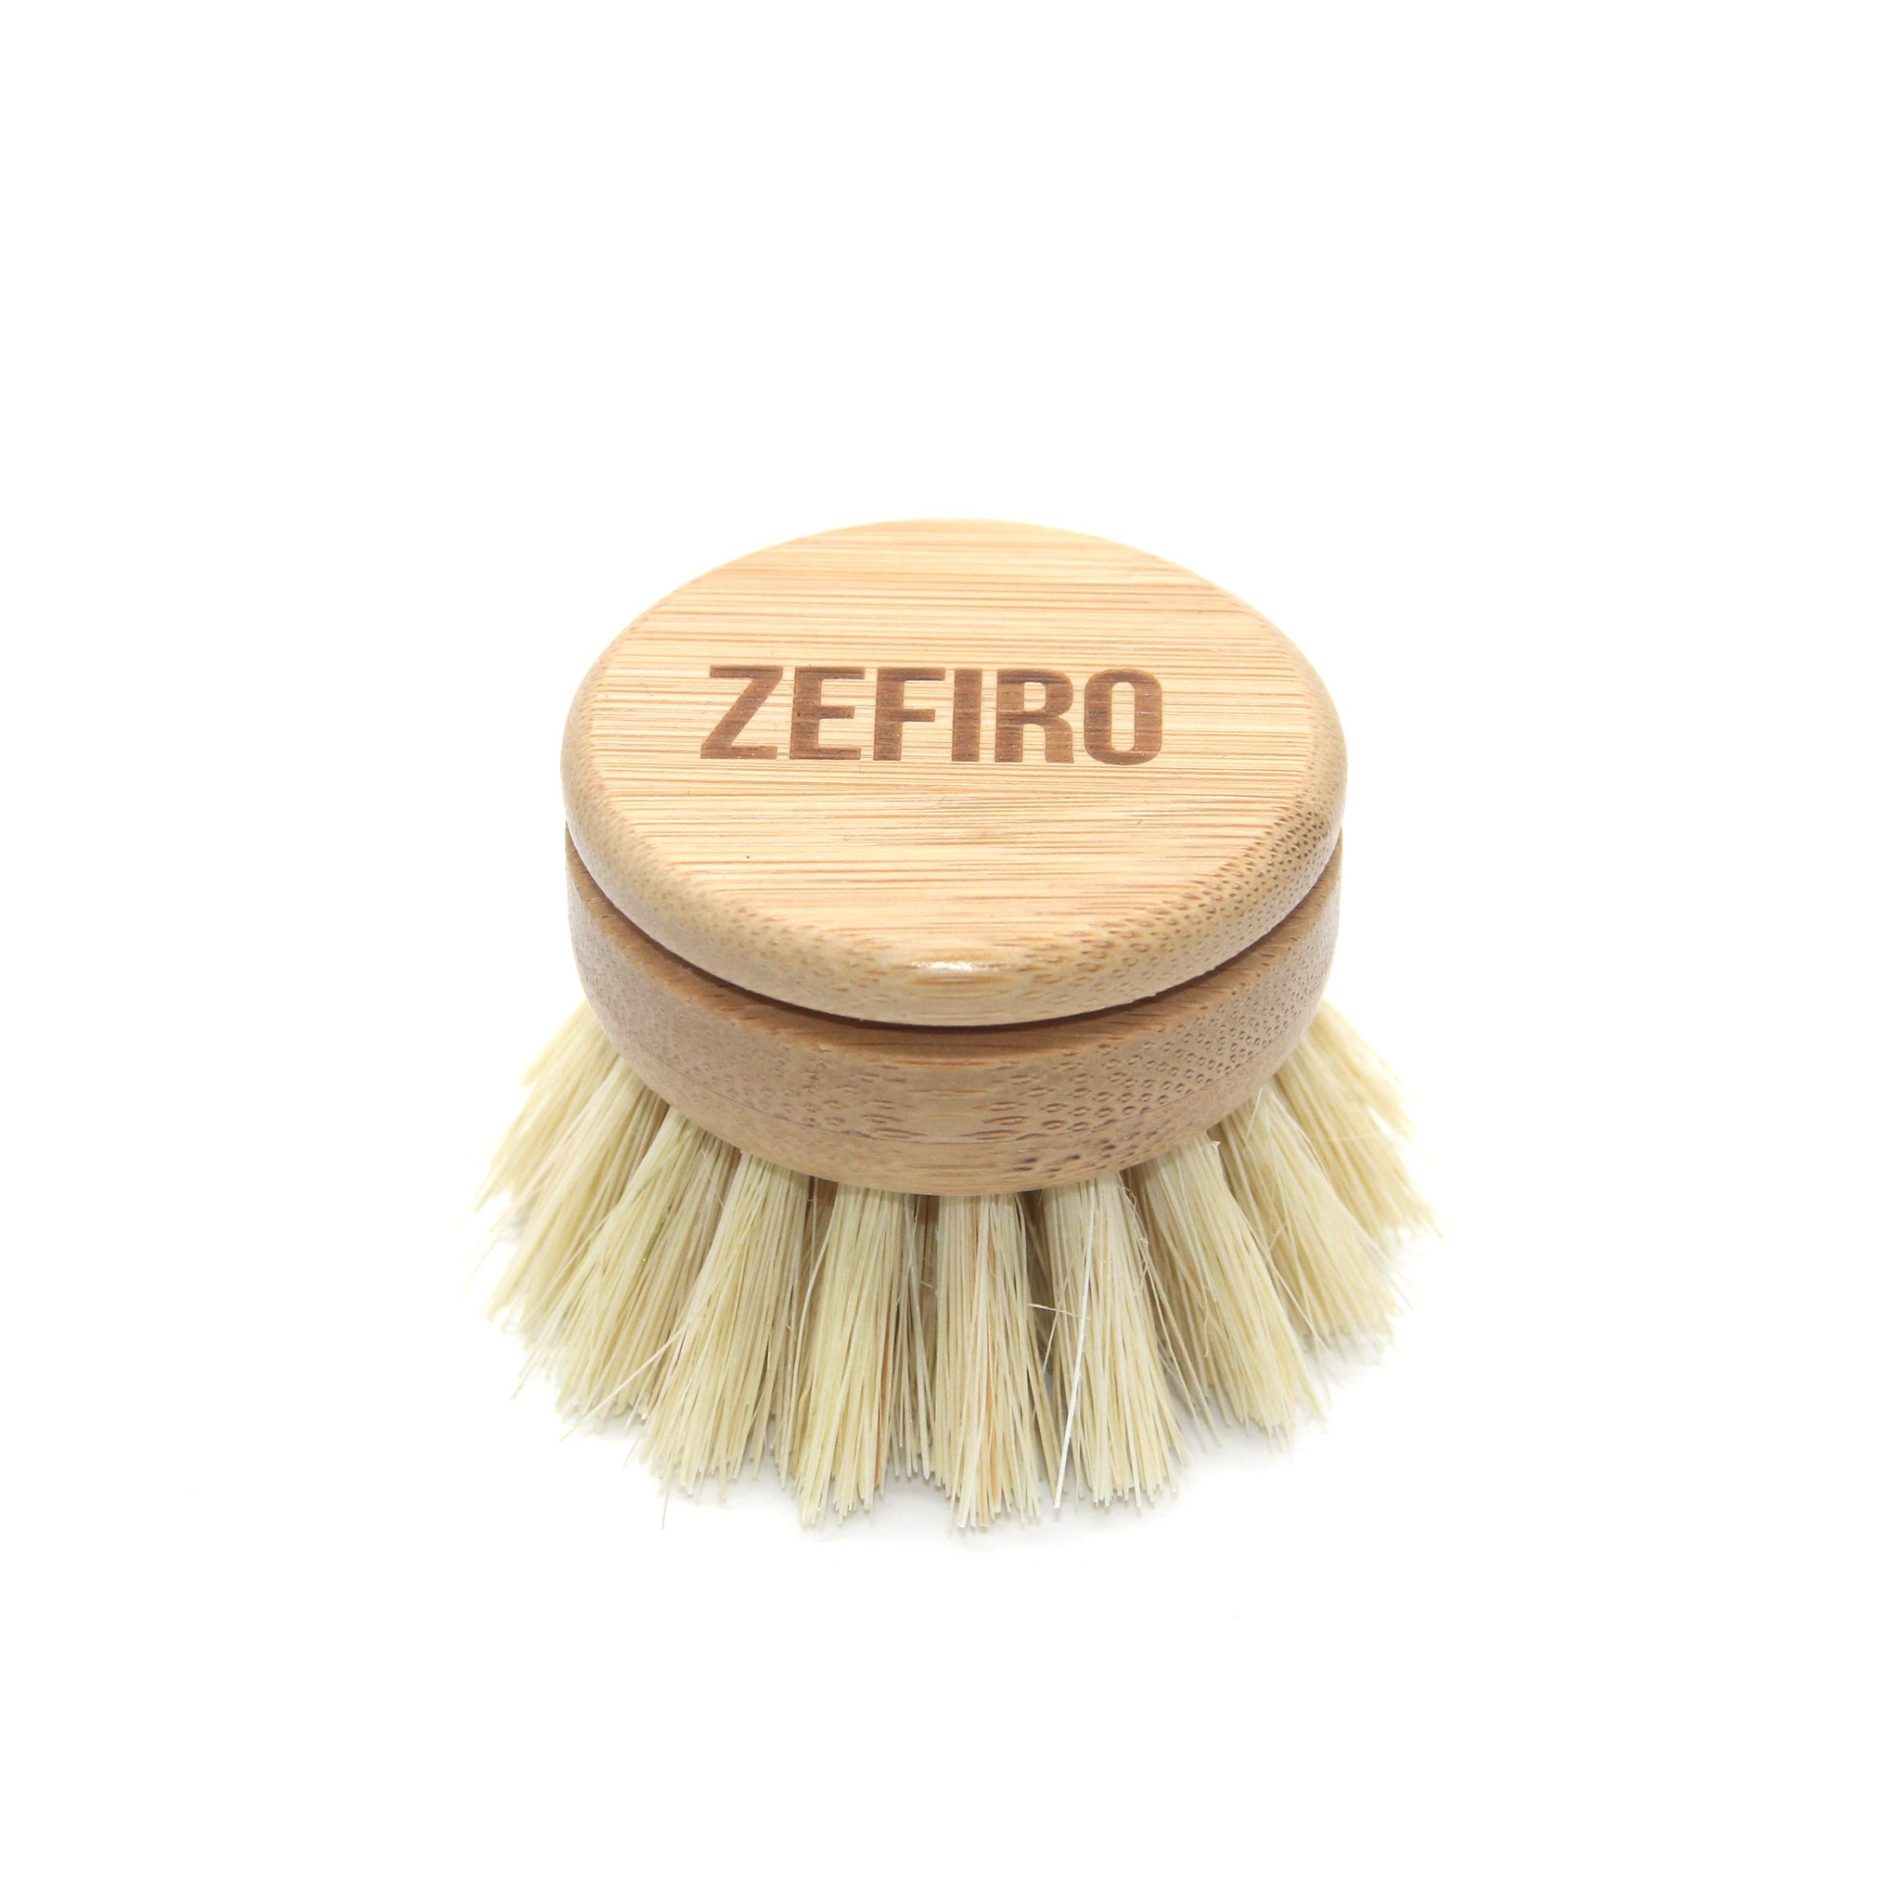 Plastic-Free Dish Soap and Brush Set - Eco Girl Shop Zero Waste Online